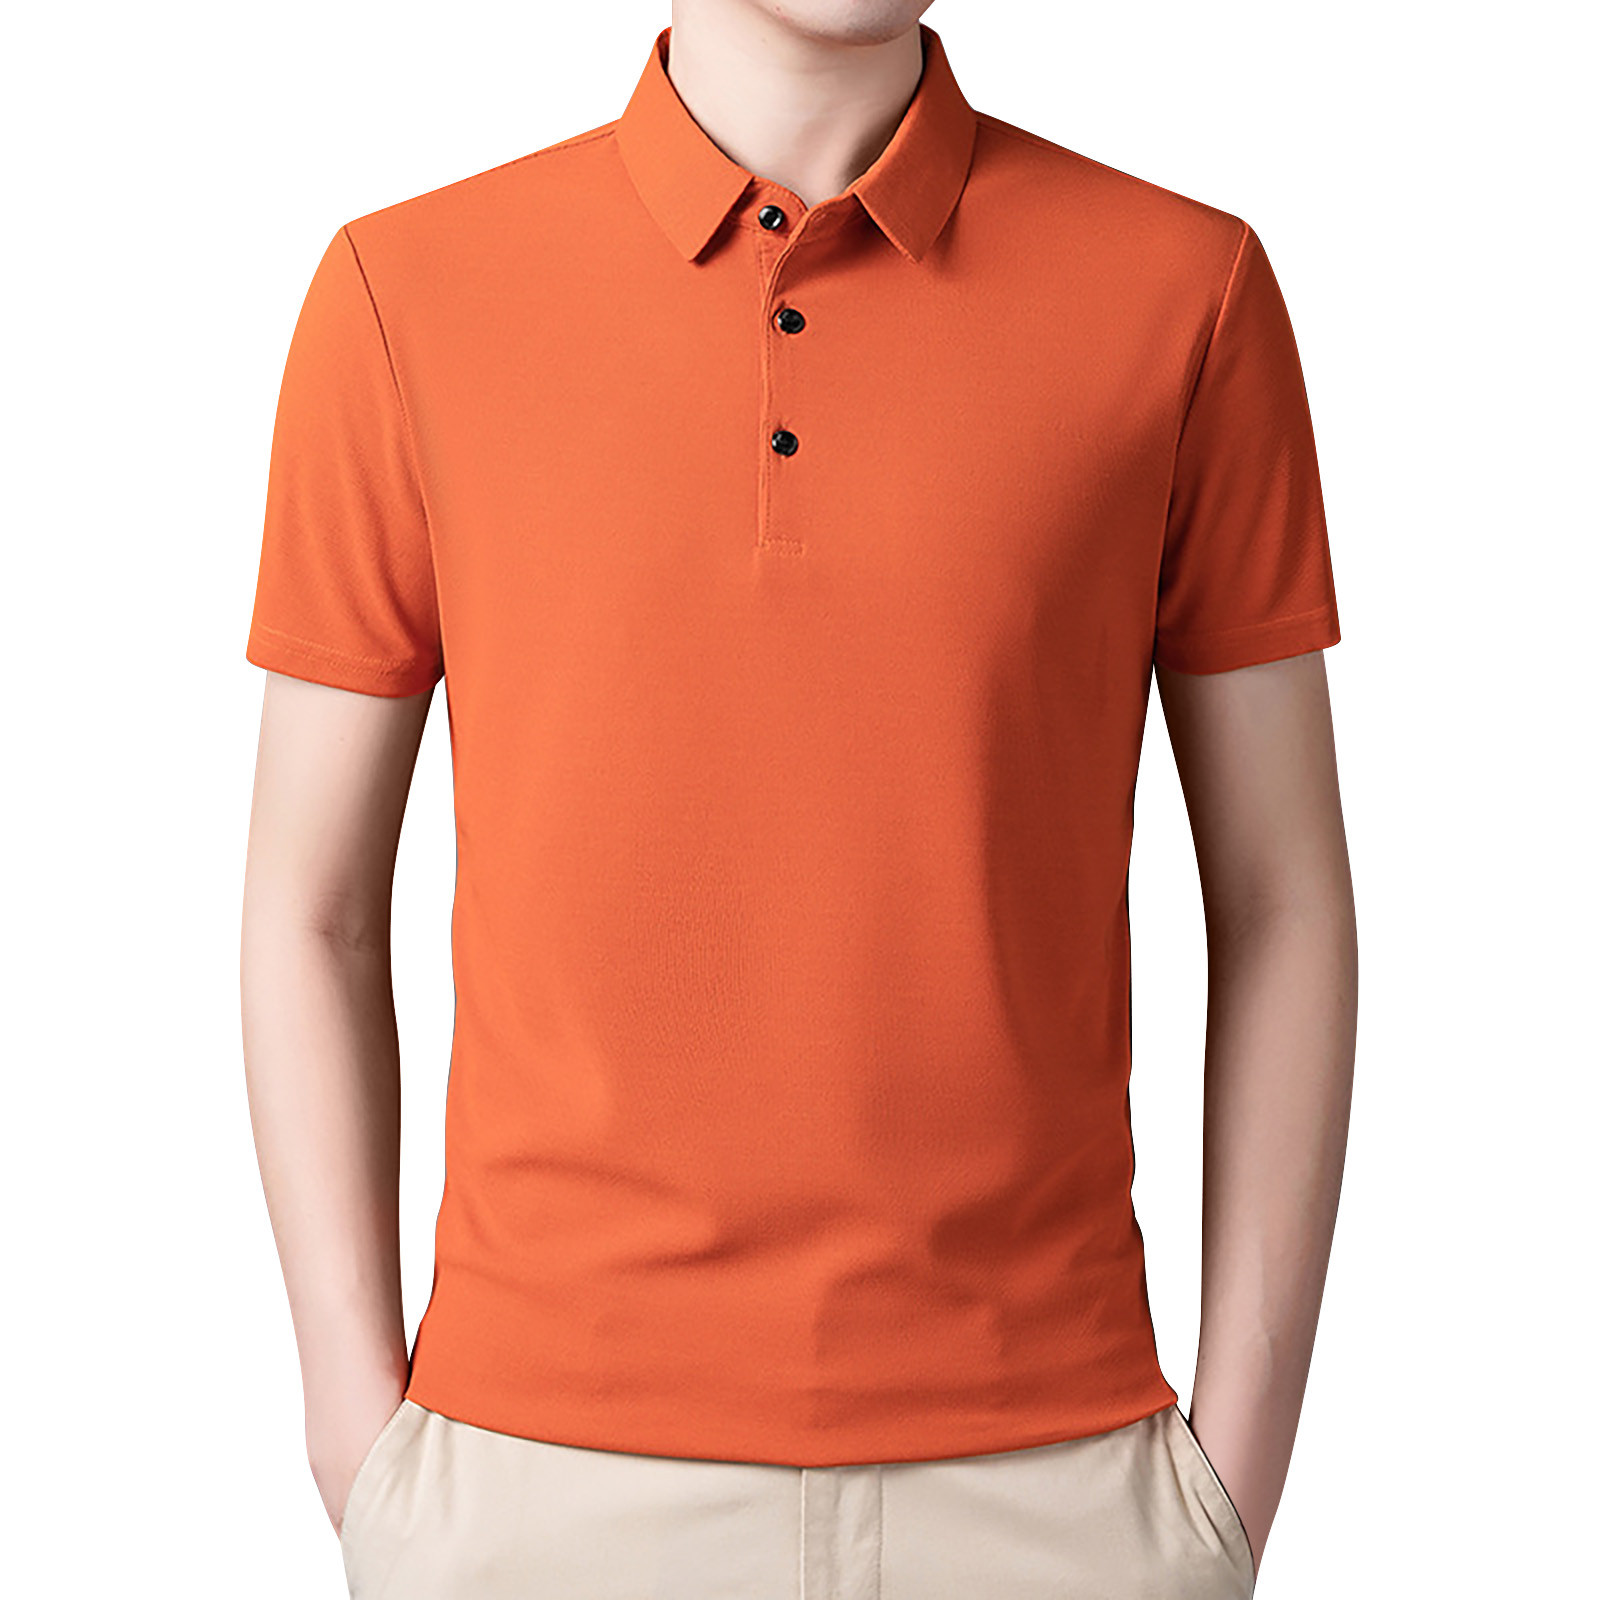 Pedort Shirts For Men Plus Size Dry Fit Performance Print Short Sleeve  Moisture Wicking Golf Polo Shirts Cotton Tops Orange,4XL